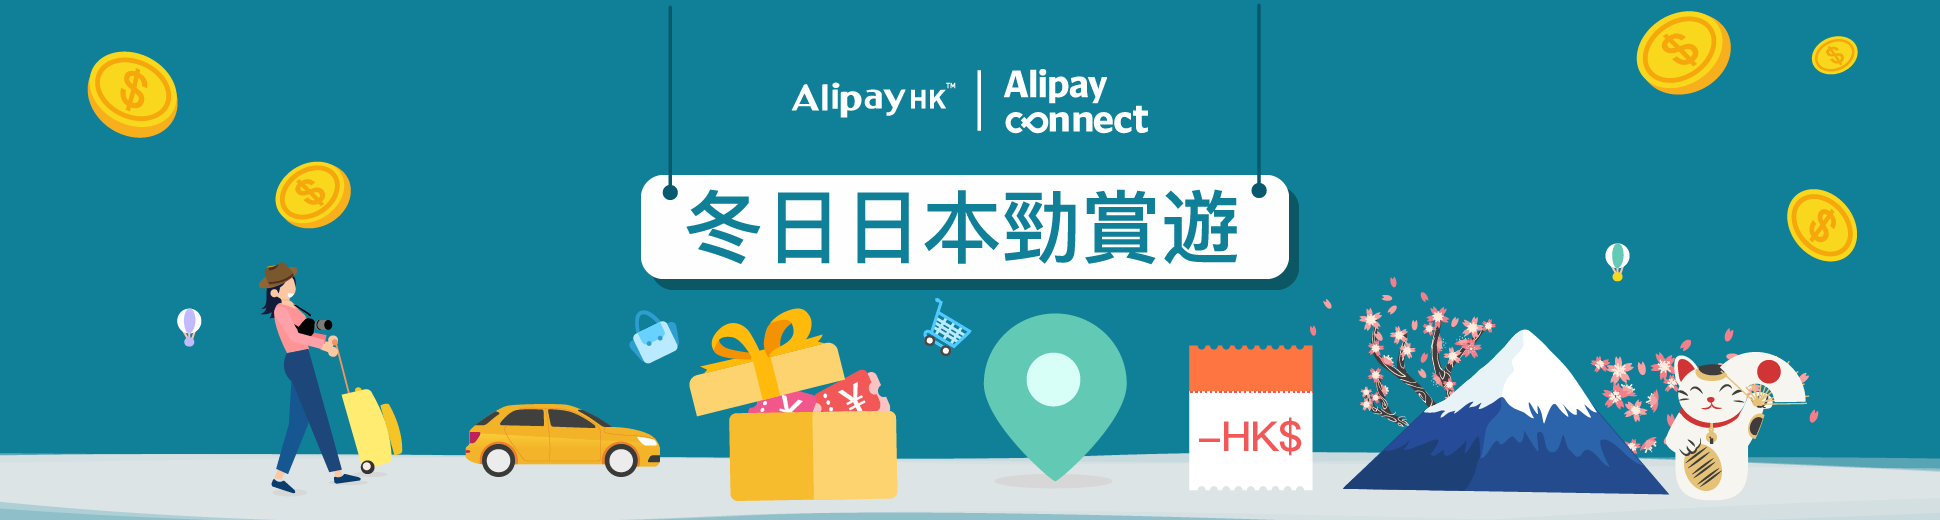 AlipayHK 支付寶 香港 日本 消費 多重賞